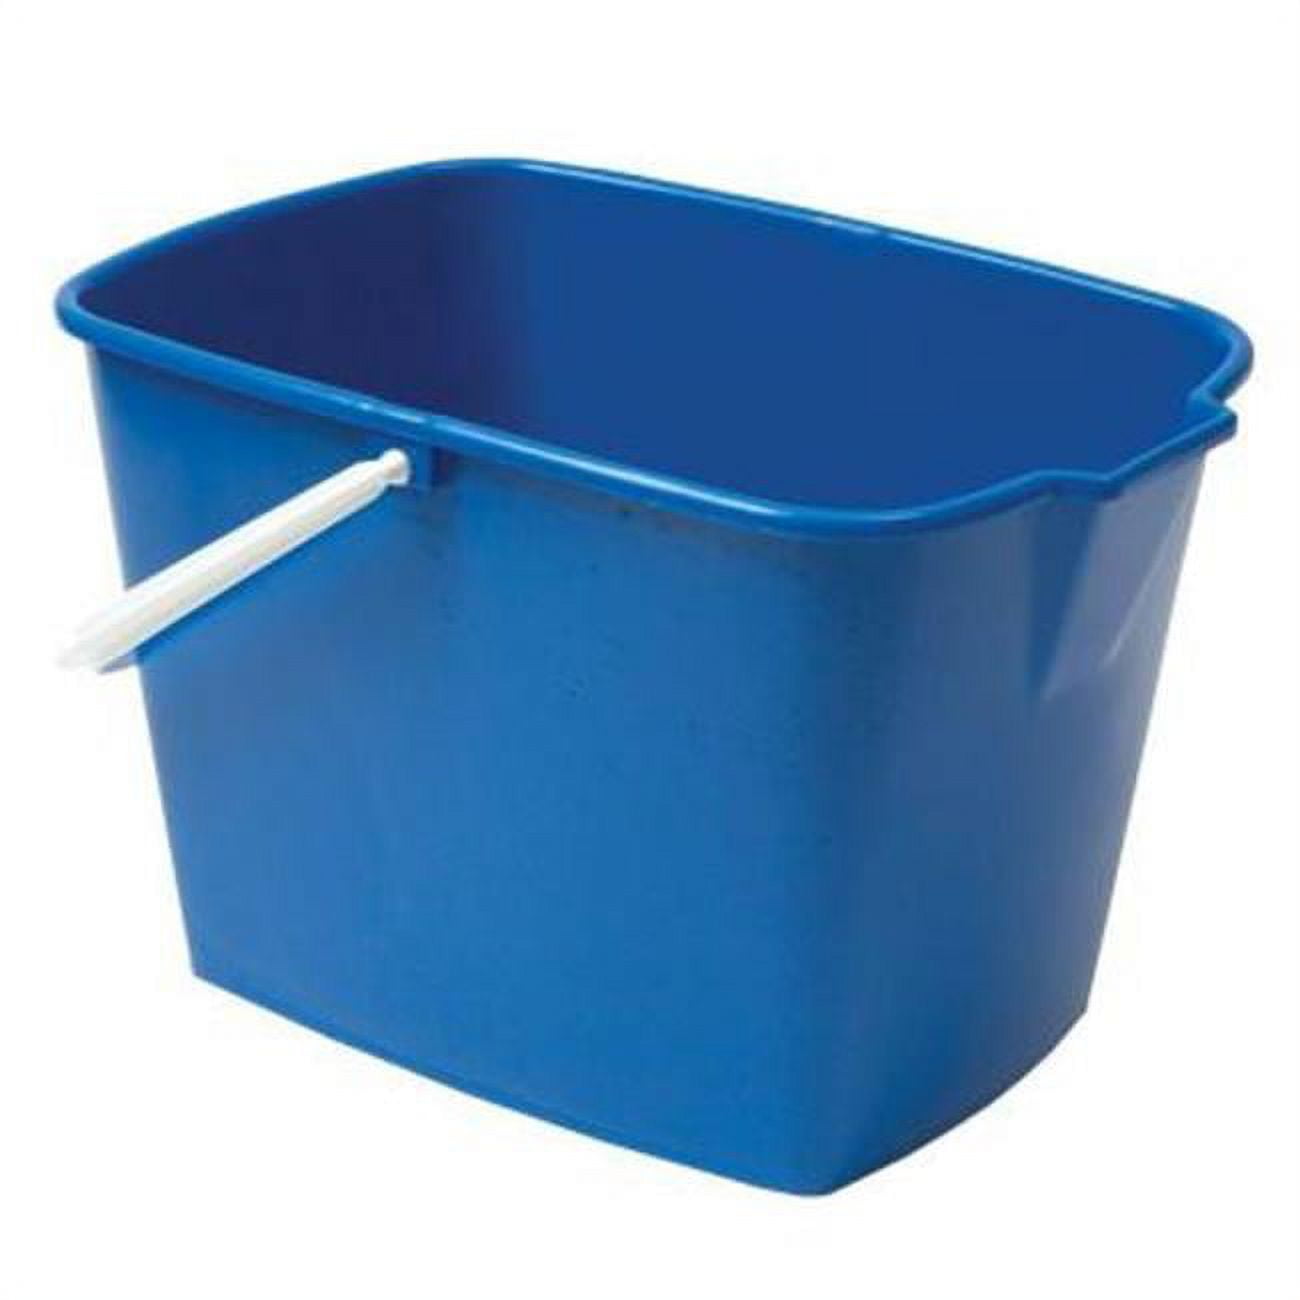 Mop Bucket With Handle Design Large Opening Rectangular Bucket For